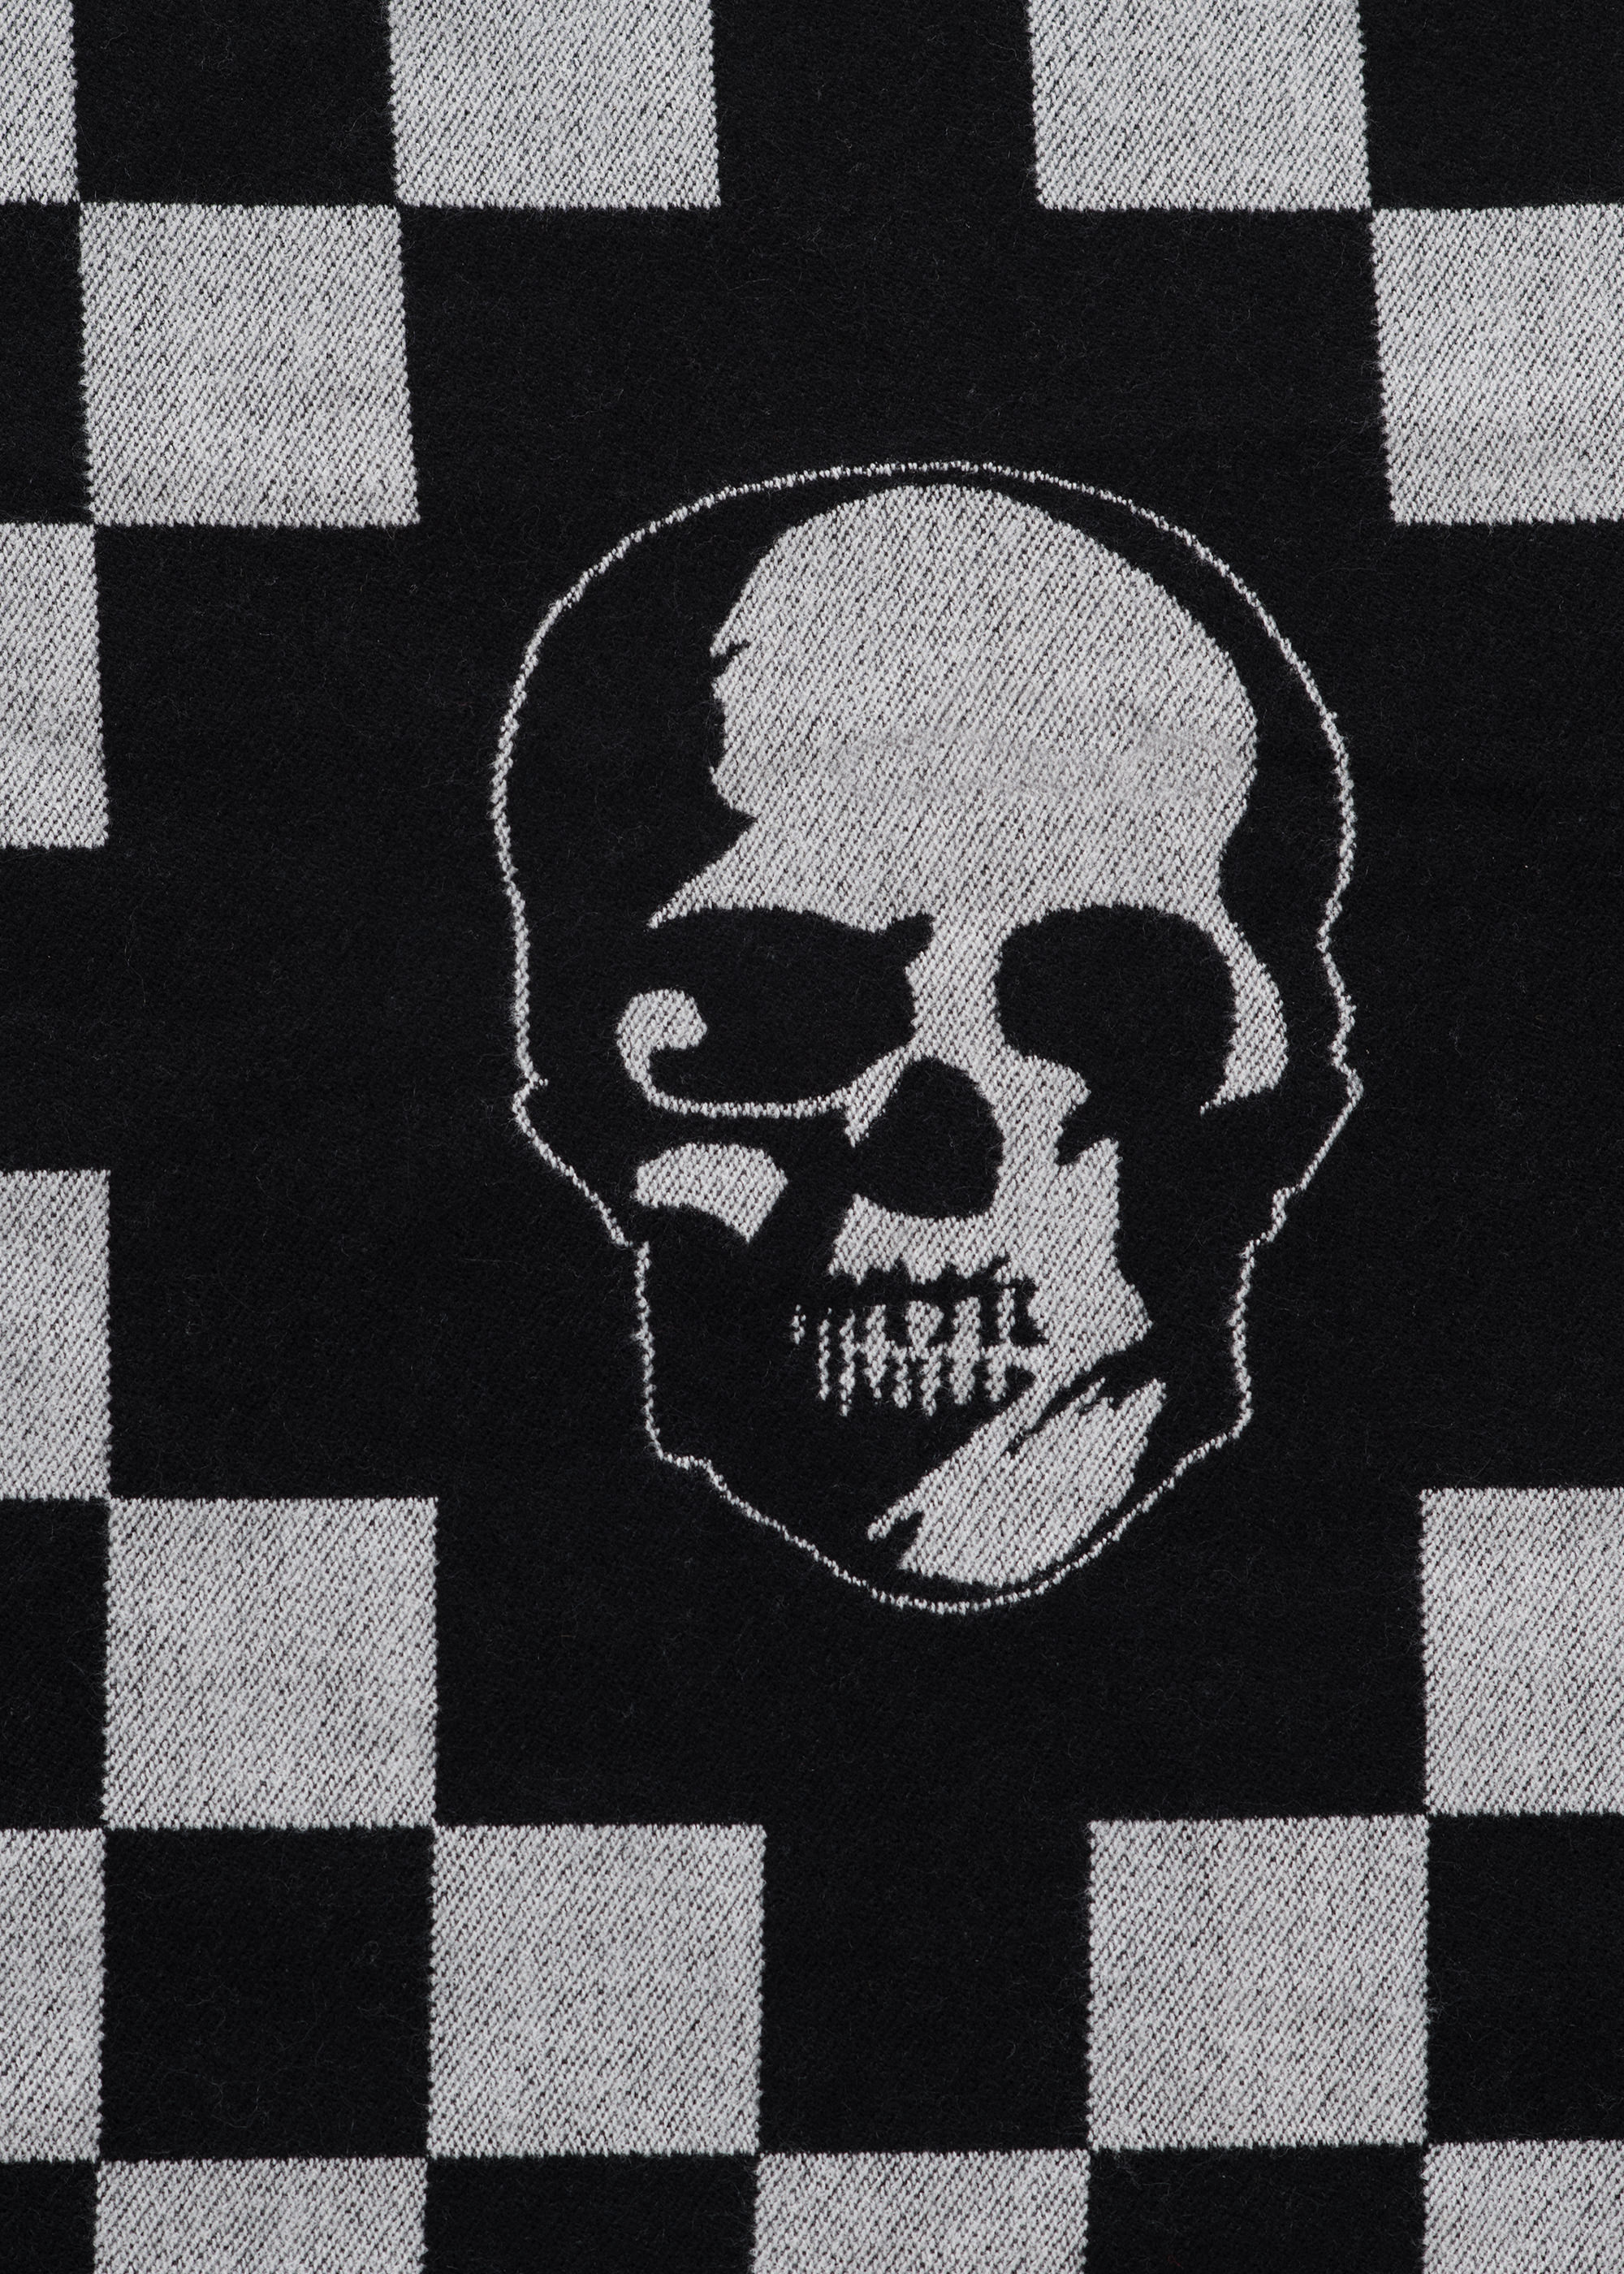 HAUPTSTADTROCKER Checkered Flag Schal